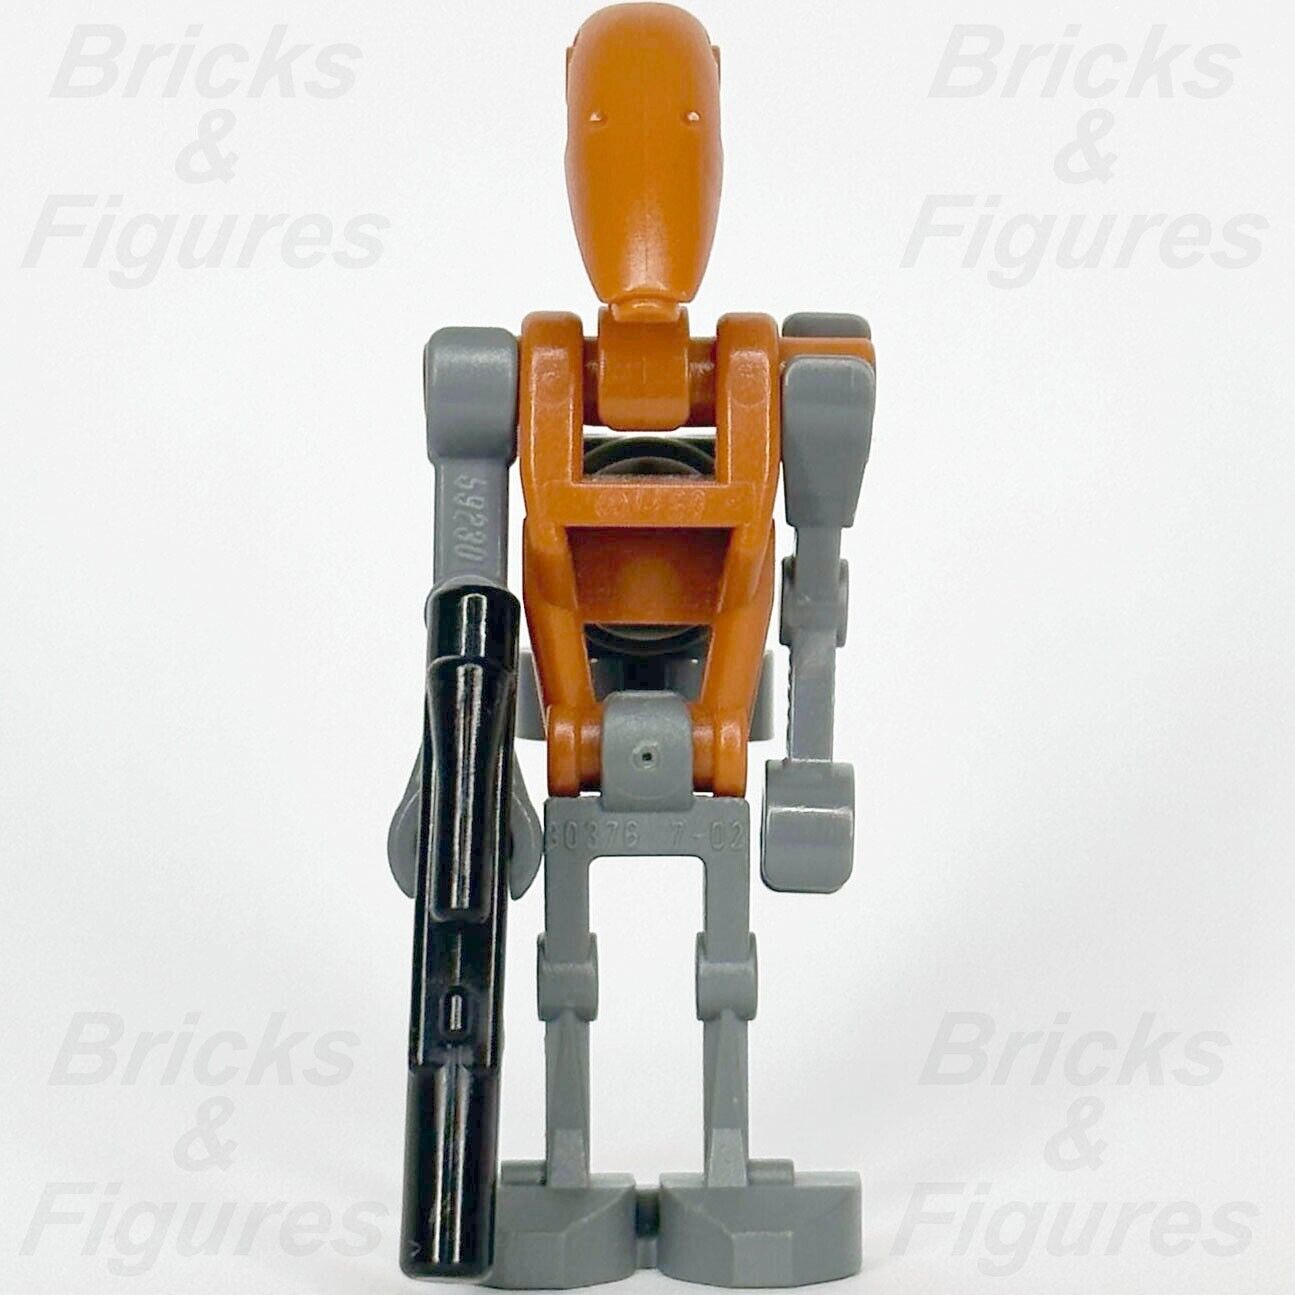 LEGO Star Wars Rocket Battle Droid Minifigure The Clone Wars 8086 8016 sw0228 - Bricks & Figures